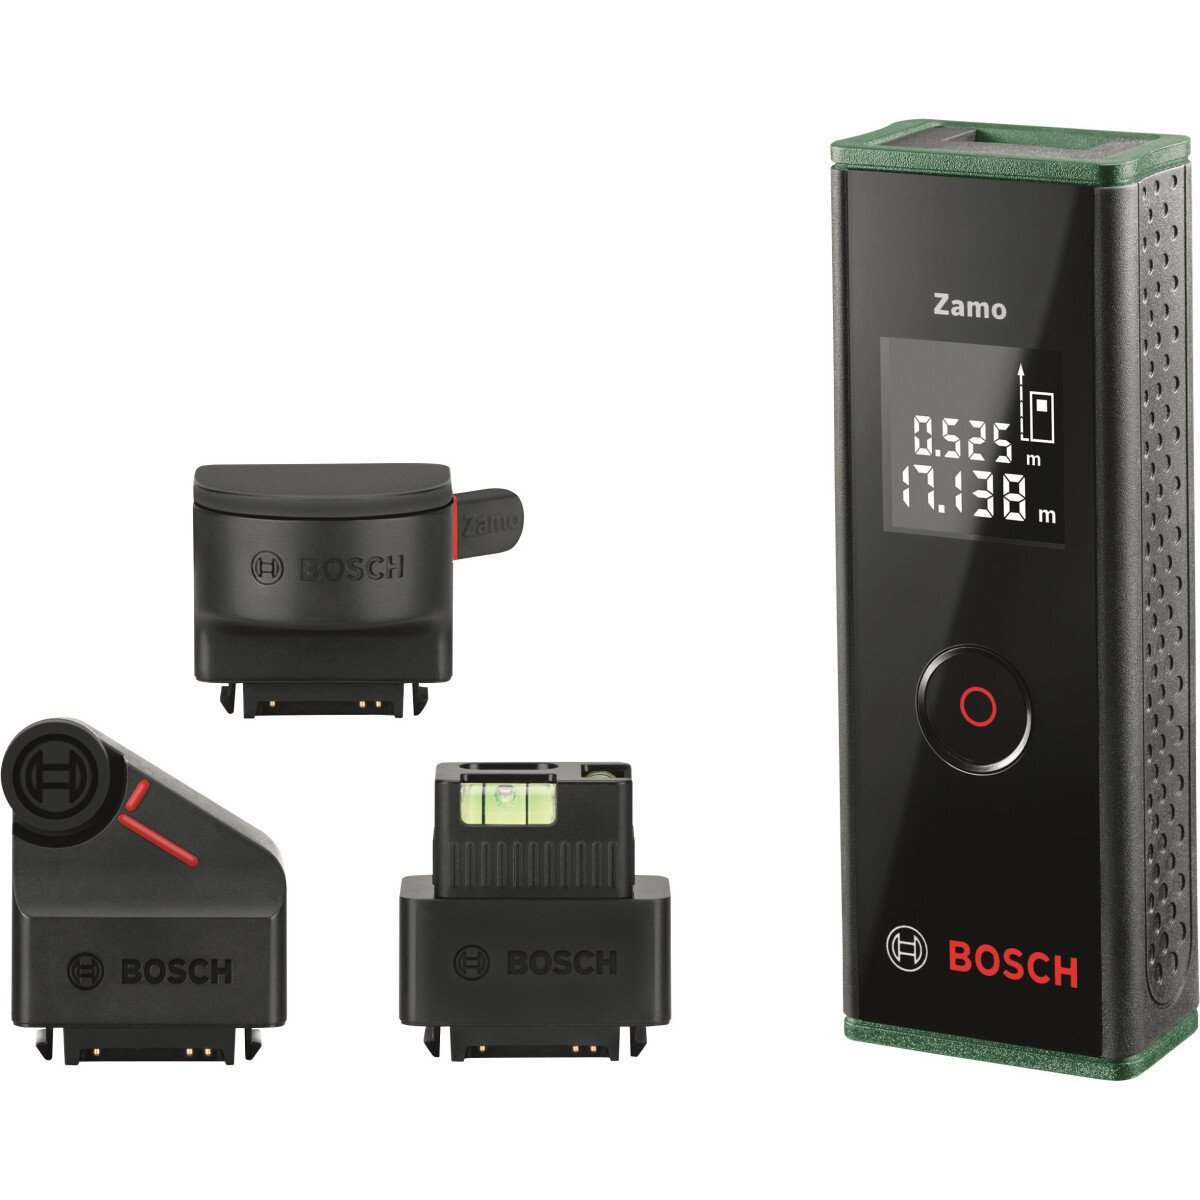 Bosch ZAMO3 Set Digital Laser Measure 0.15-20.00m with 3 Adapters